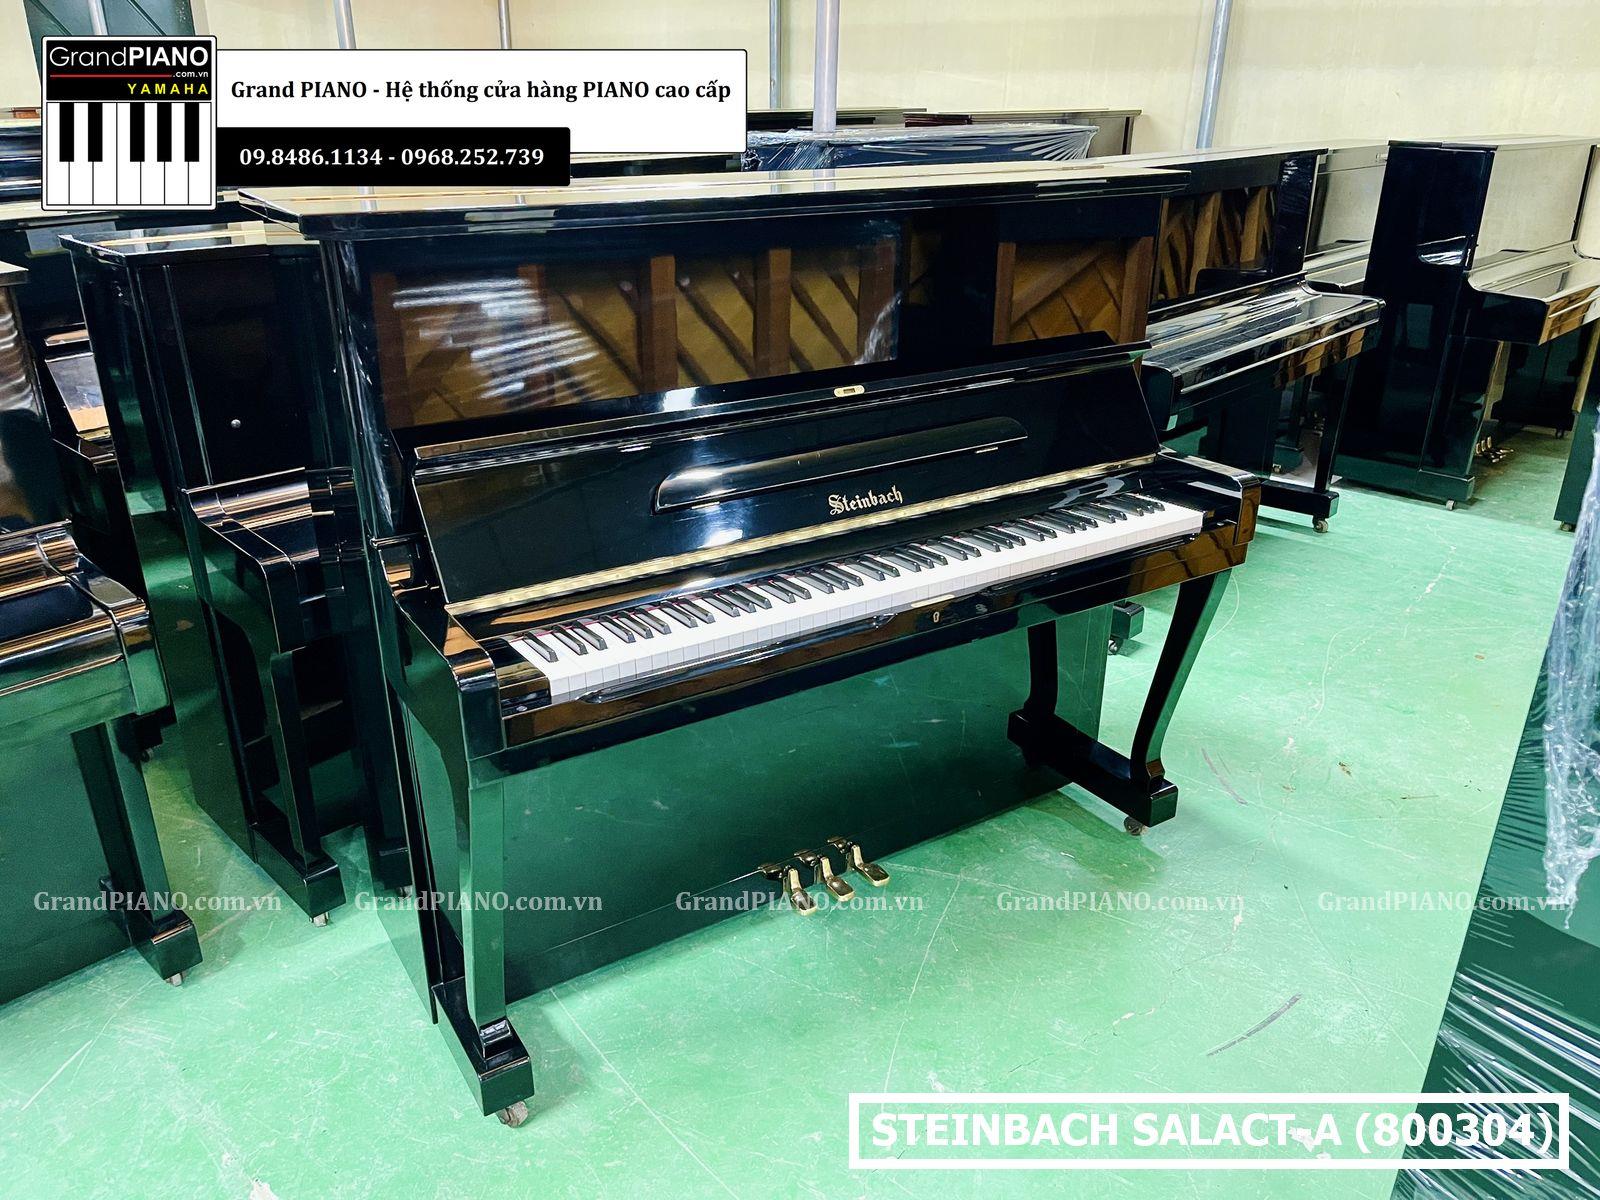 Đàn Piano cơ STEINBACH SALACT-A (800304)